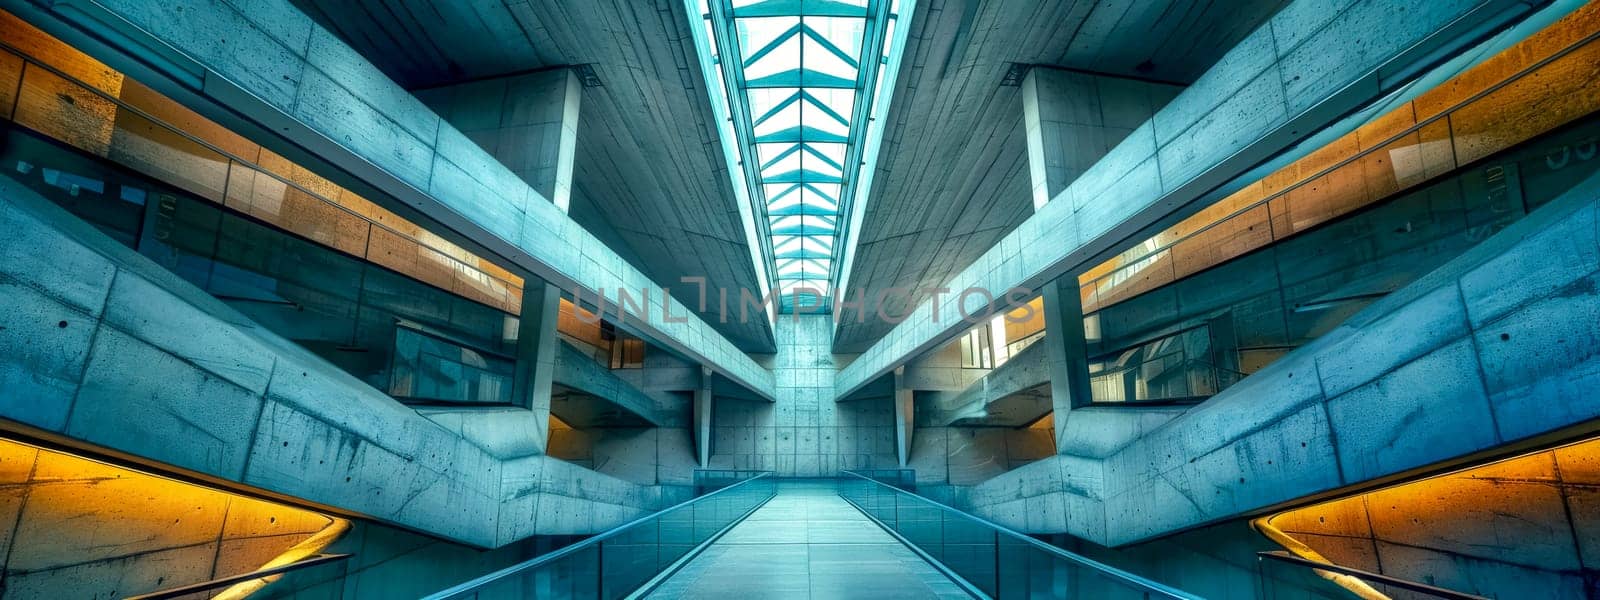 Futuristic symmetrical corridor with blue skylights by Edophoto